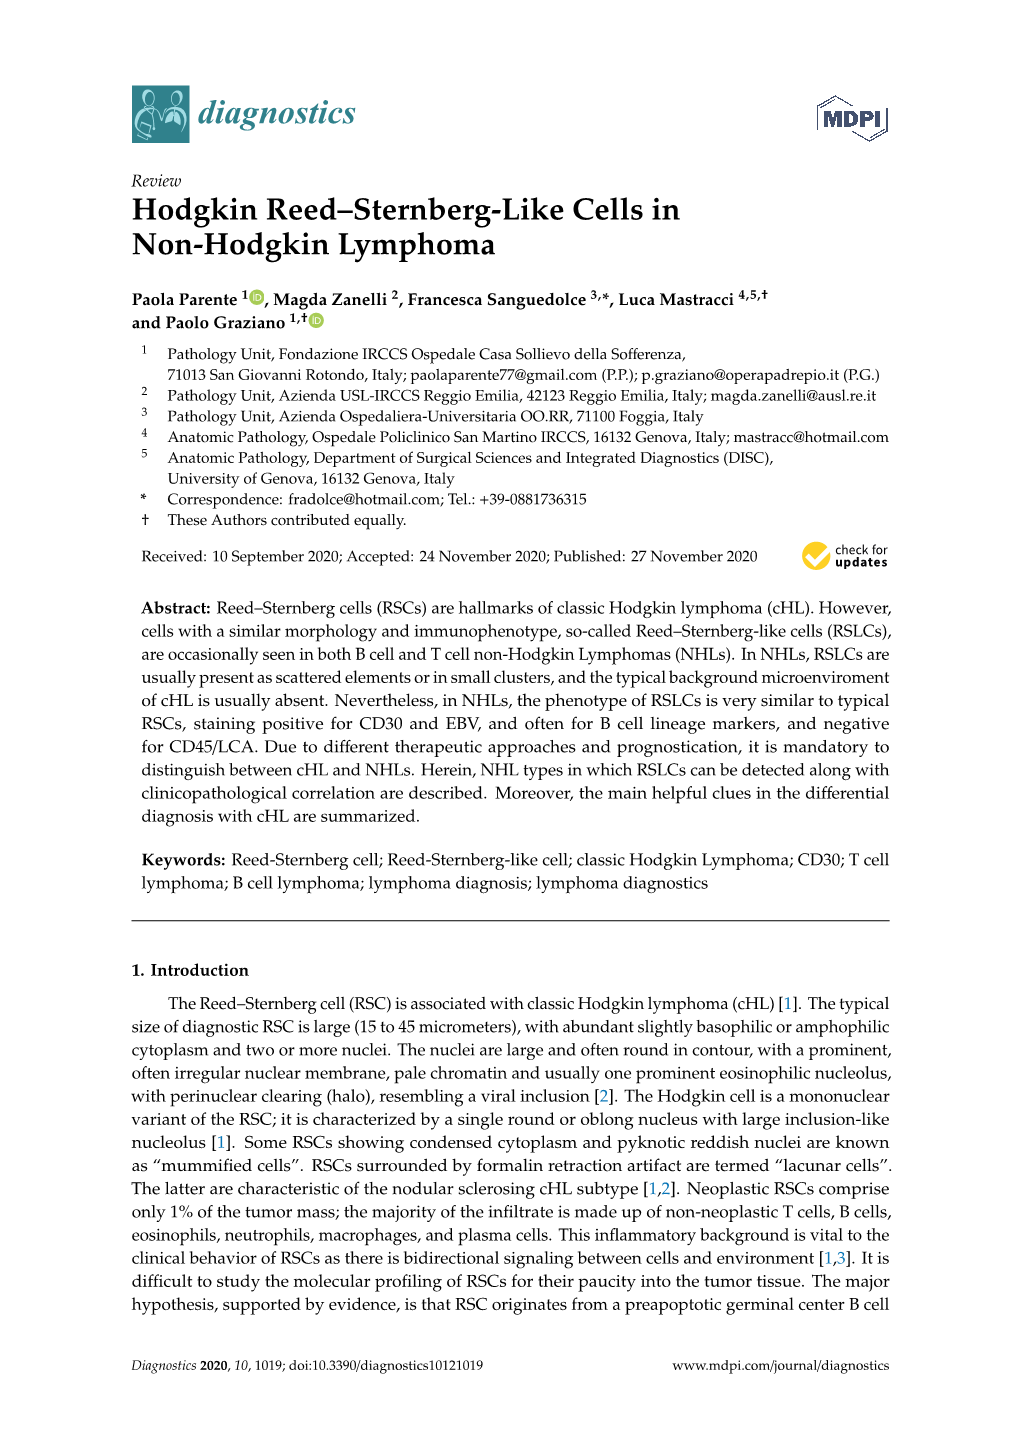 Hodgkin Reed–Sternberg-Like Cells in Non-Hodgkin Lymphoma